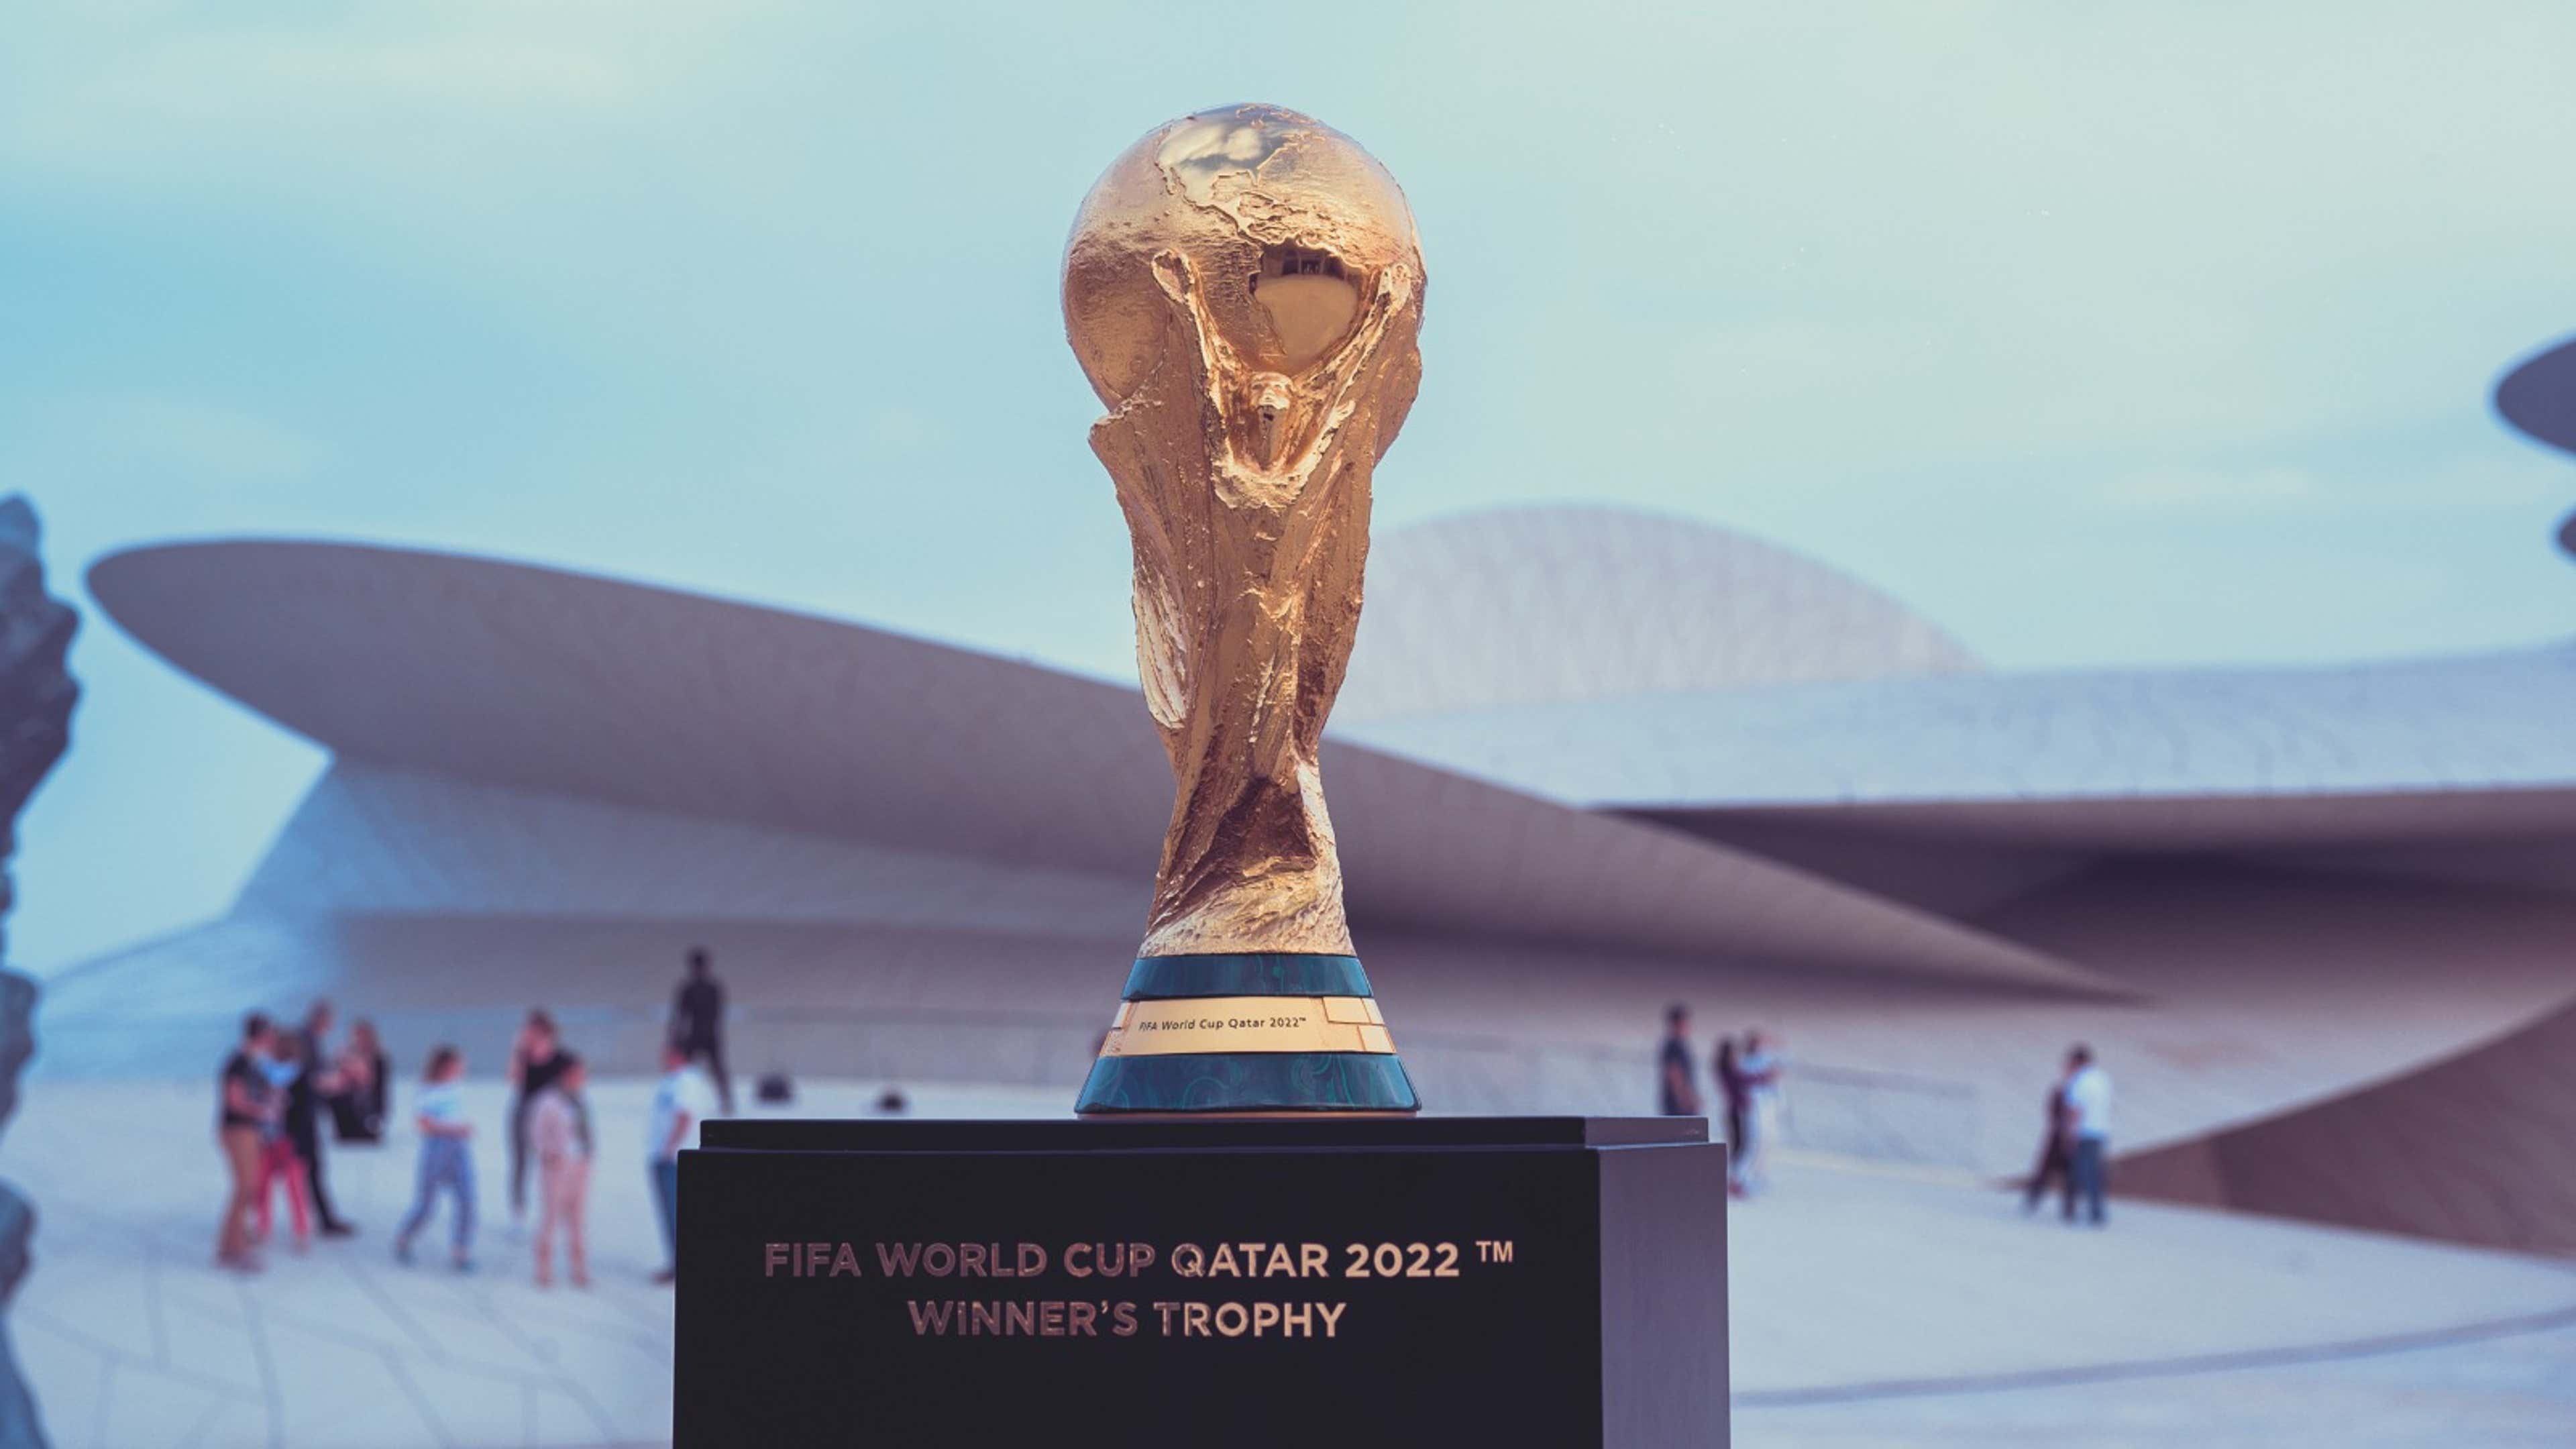 Qual a temperatura prevista no Qatar durante a Copa do Mundo 2022?